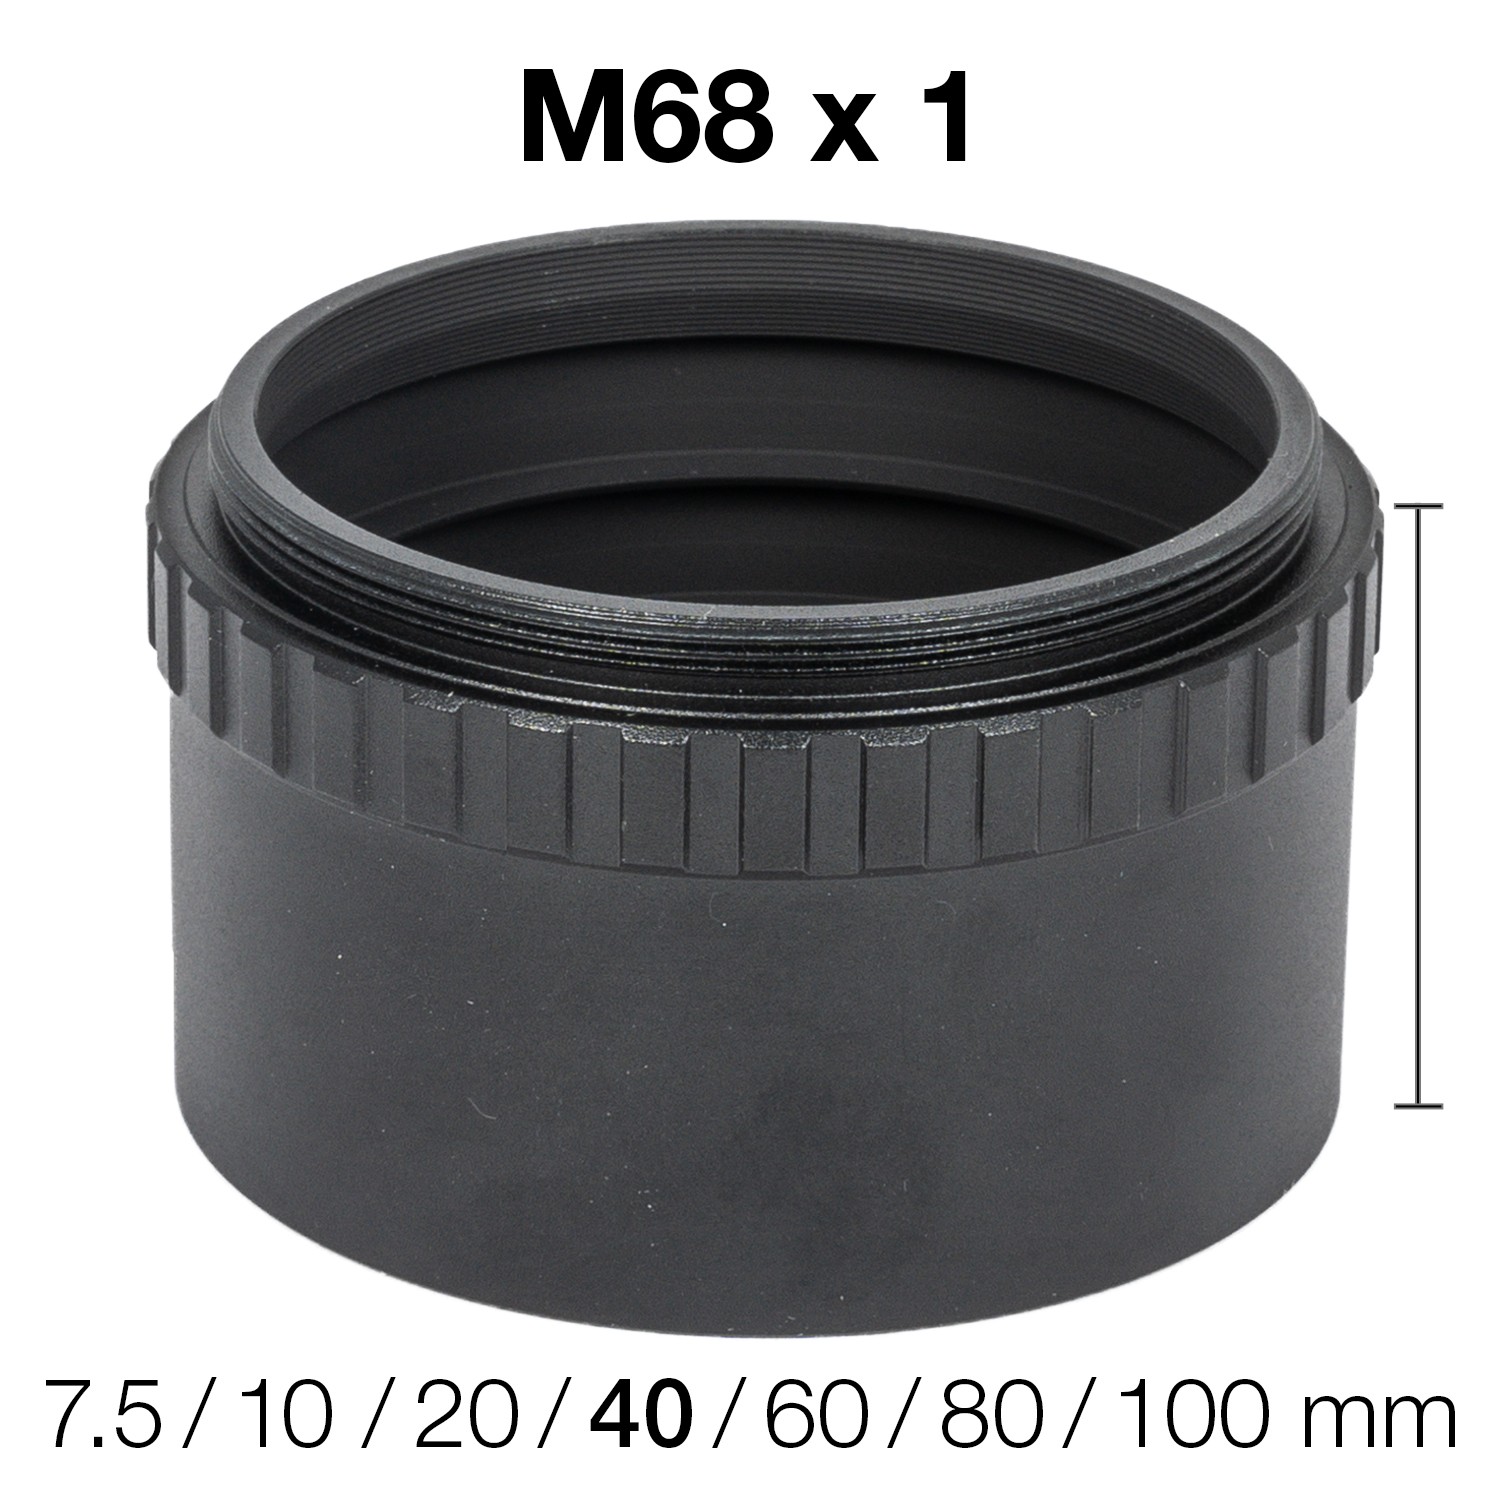 M68 Extension Tubes (7.5 / 10 / 20 / 40 / 60 / 80 / 100 mm)